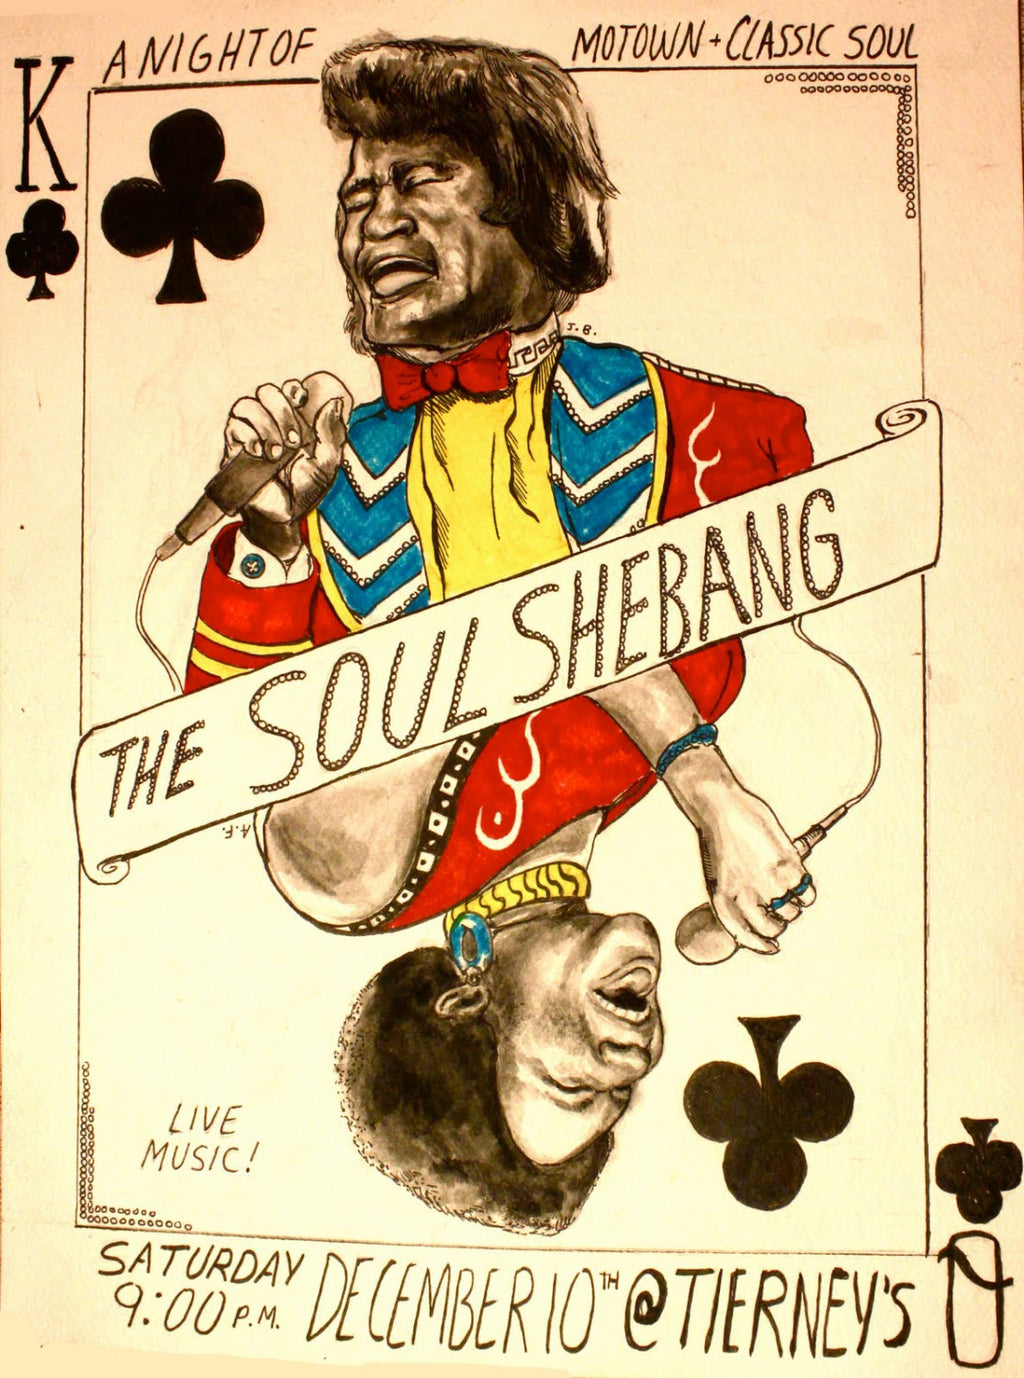 Vintage Music Art Poster - James Brown The Soul Shebang 0267